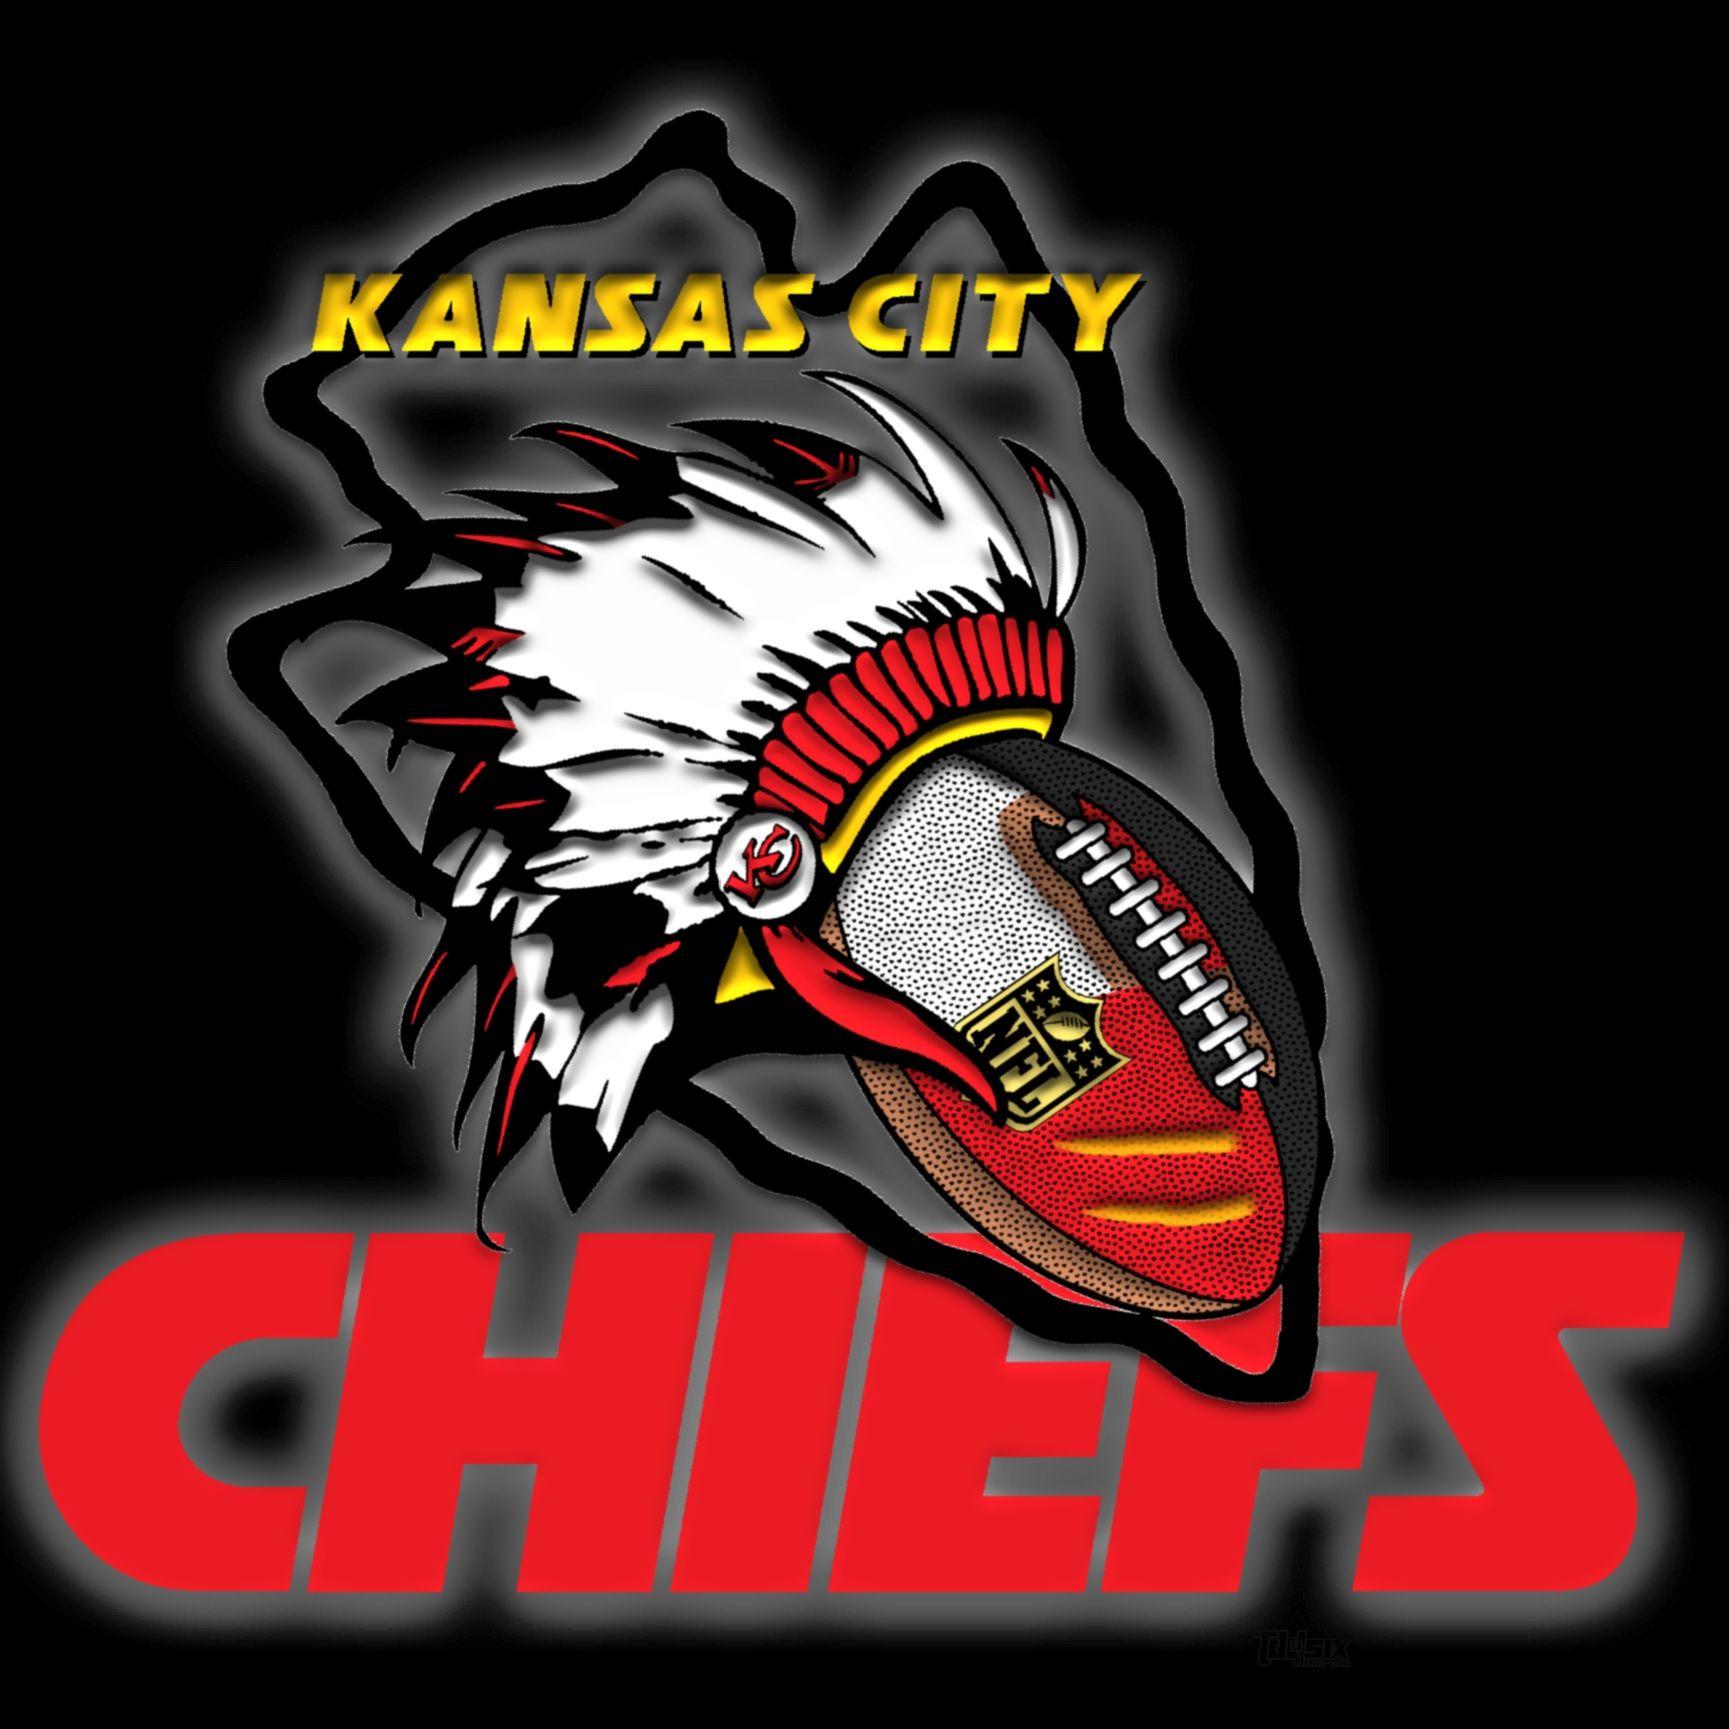 Kansas City Chiefs football. Kansas city chiefs logo